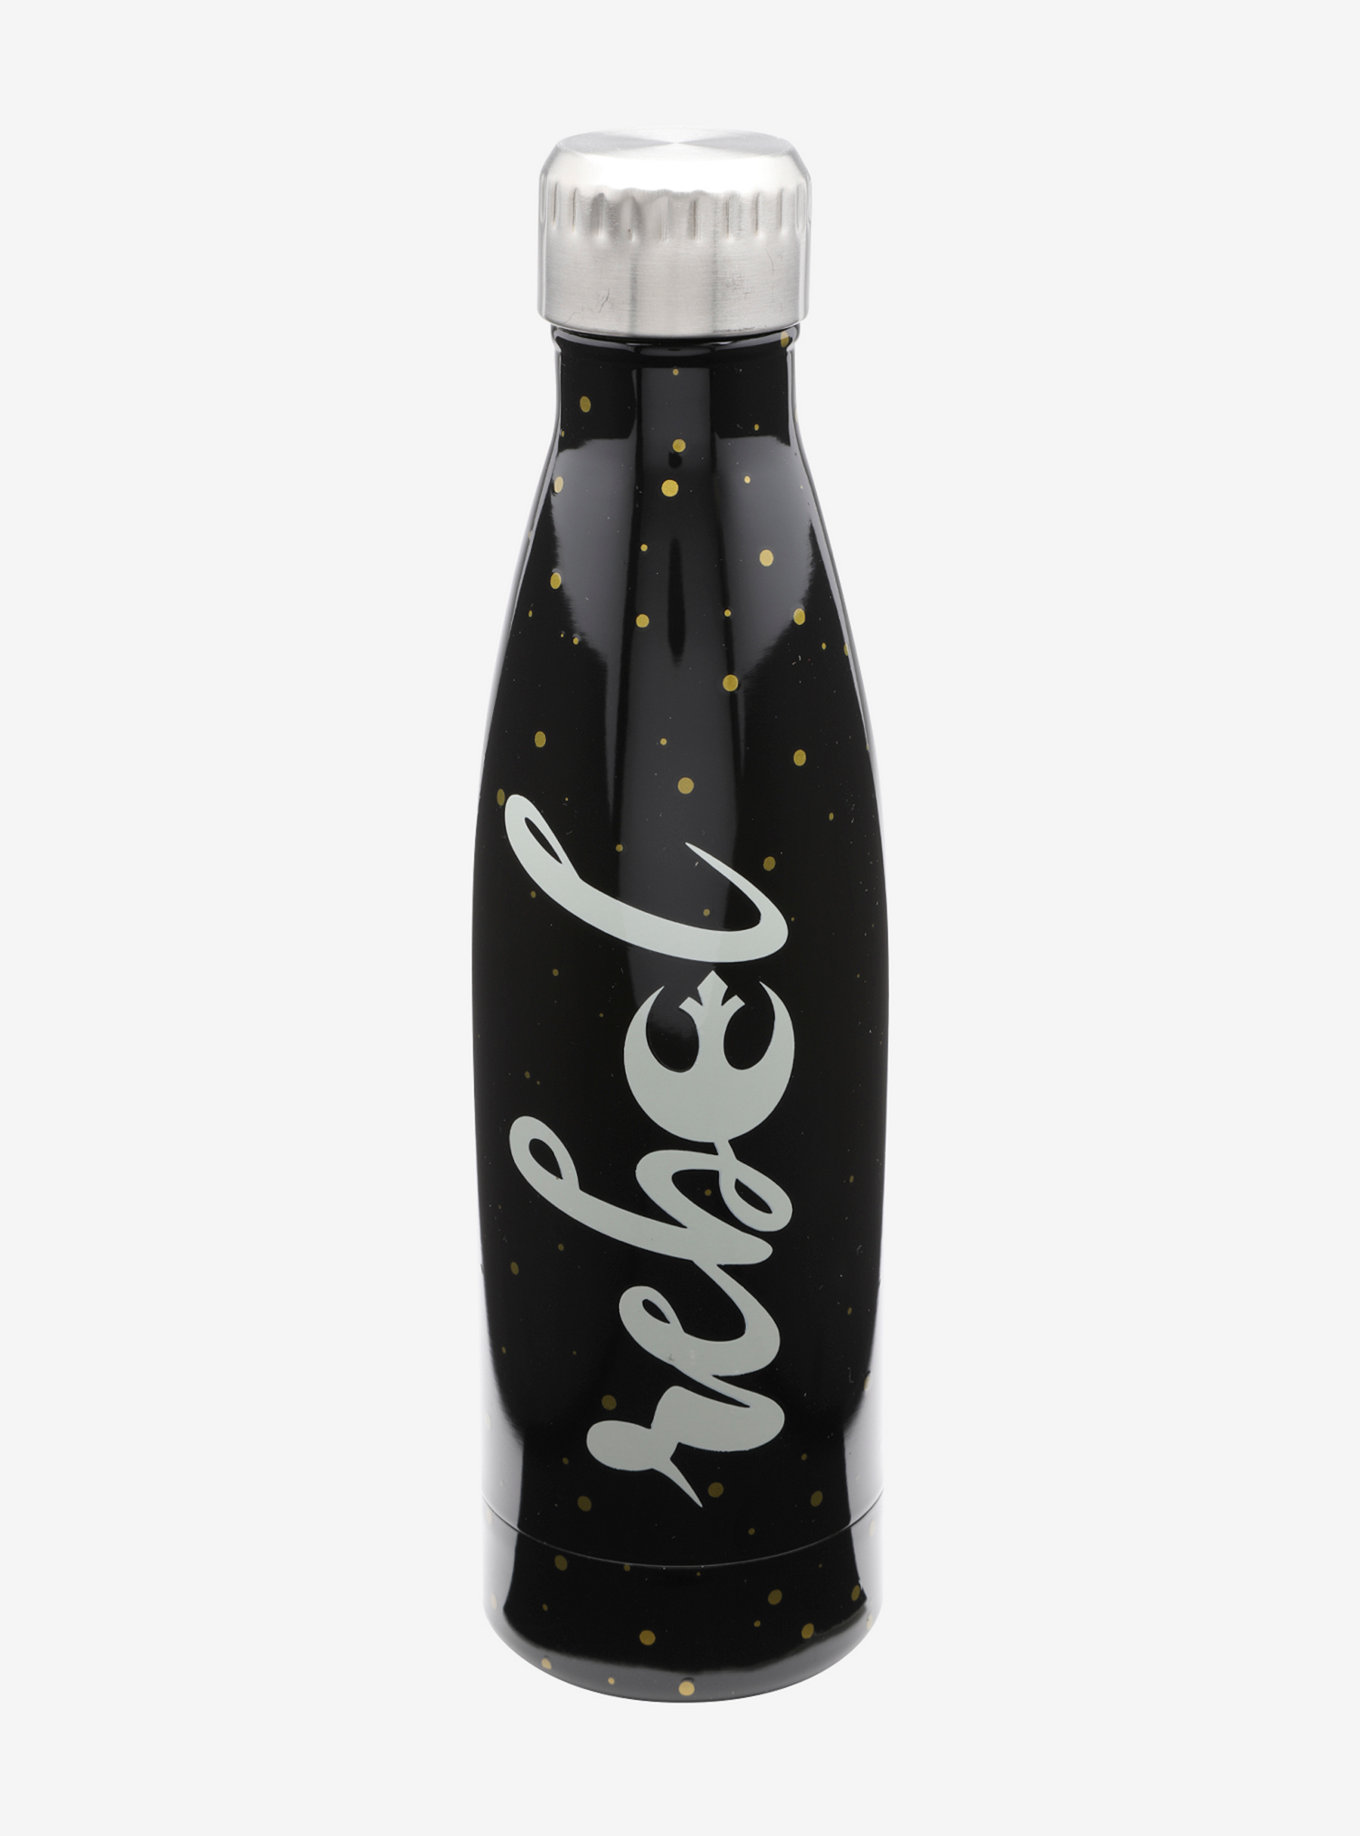 The coolest Star Wars stocking stuffers for kids: Star Wars water bottle